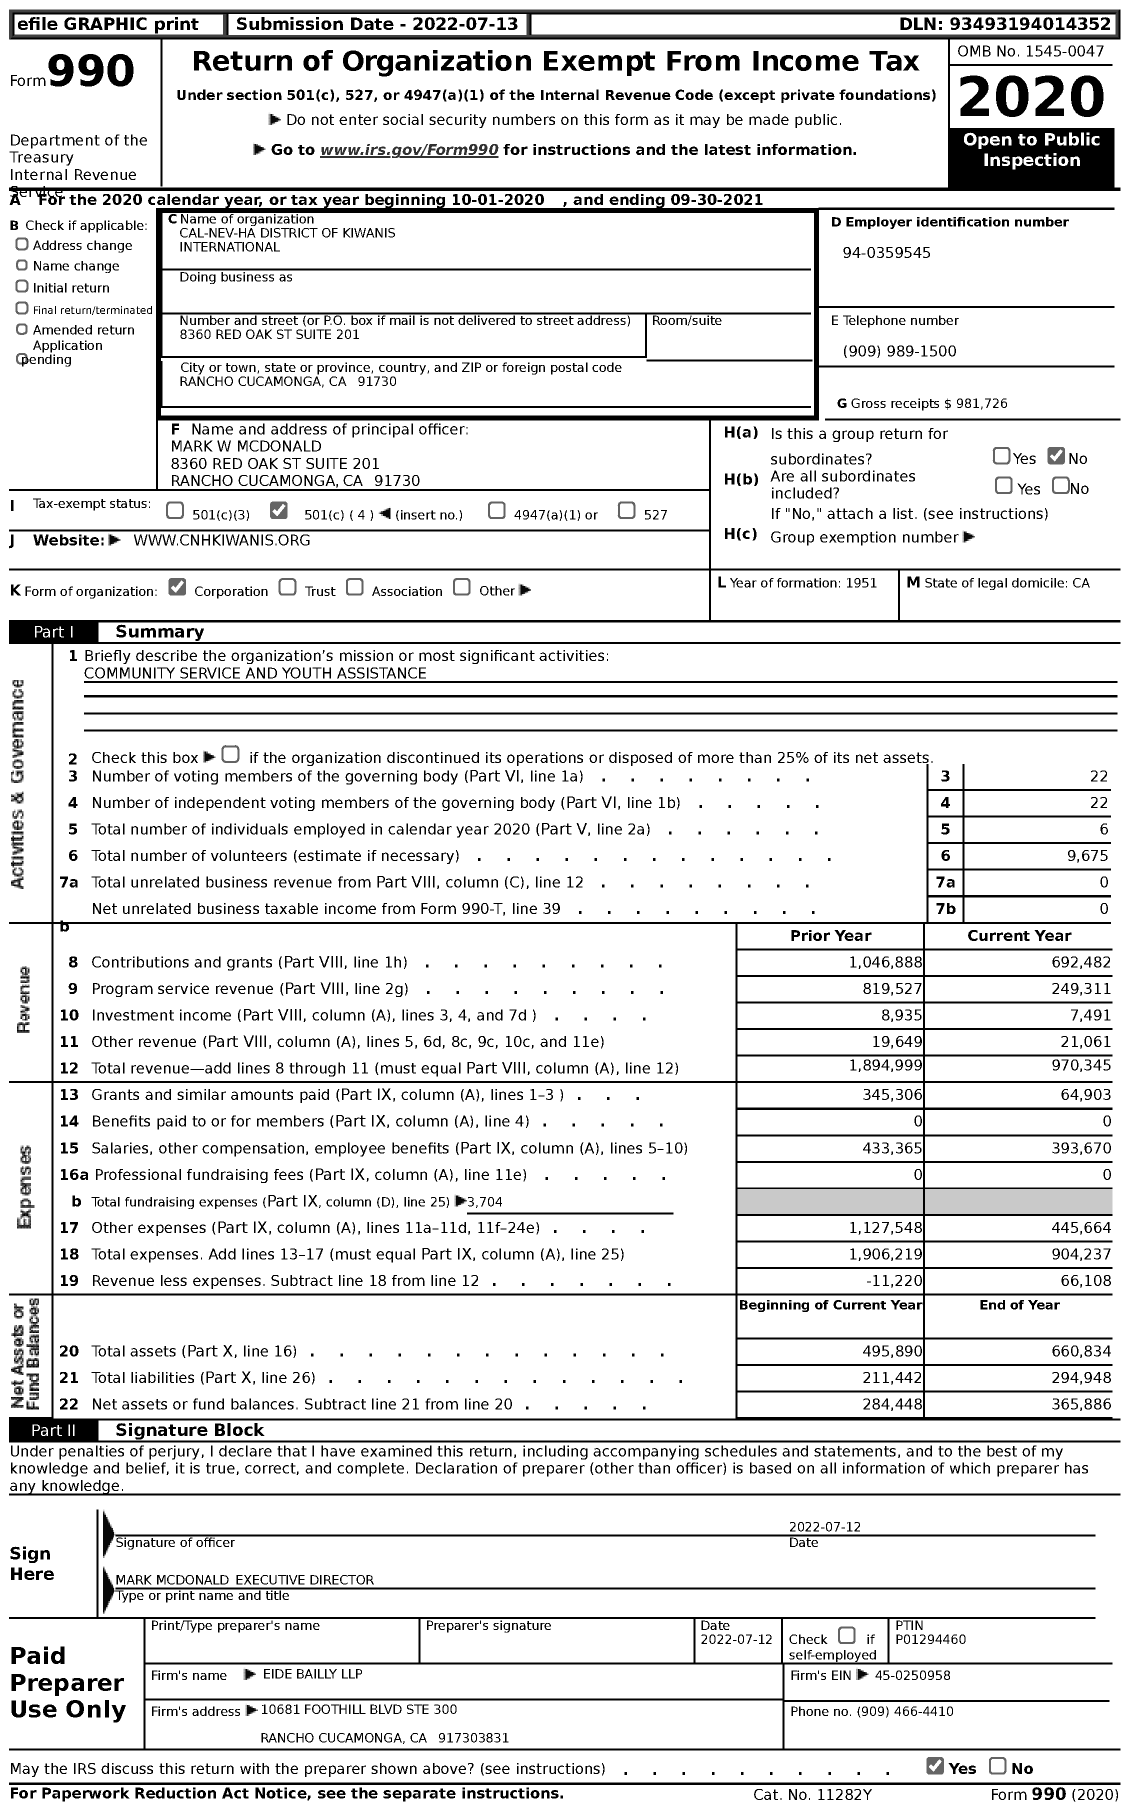 Image of first page of 2020 Form 990 for Kiwanis International - K02 California-Nevada-Hawaii Distri